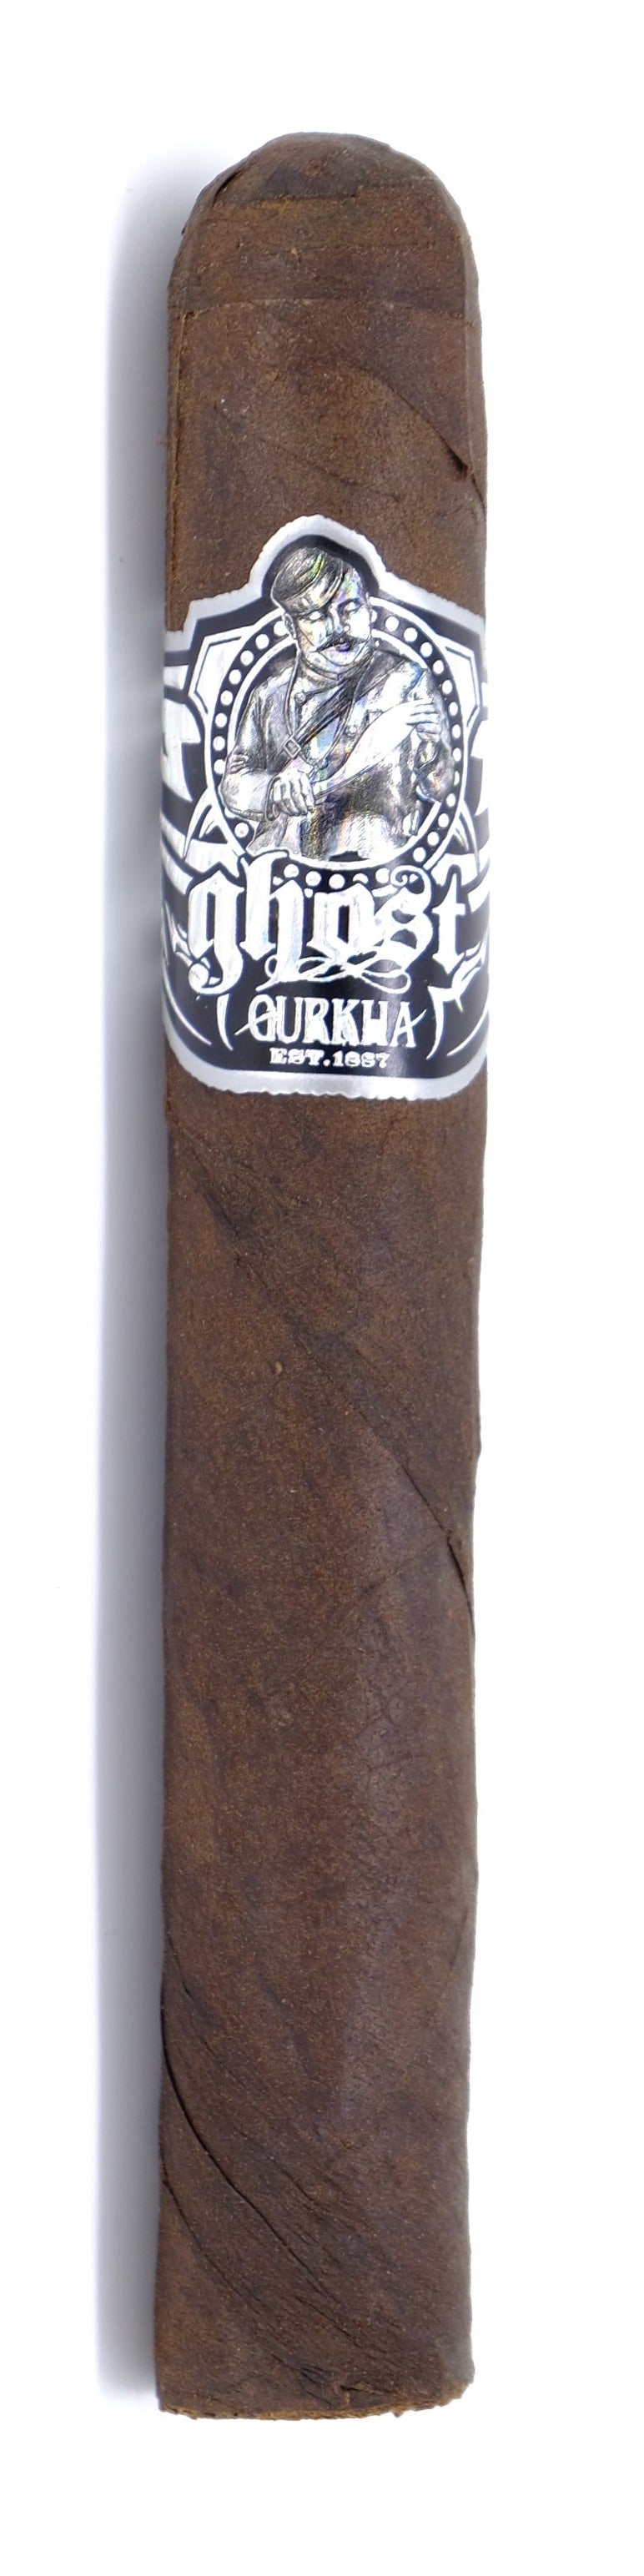 Gurkha Gost Shadow Toro Cigar_einzelne Zigarre